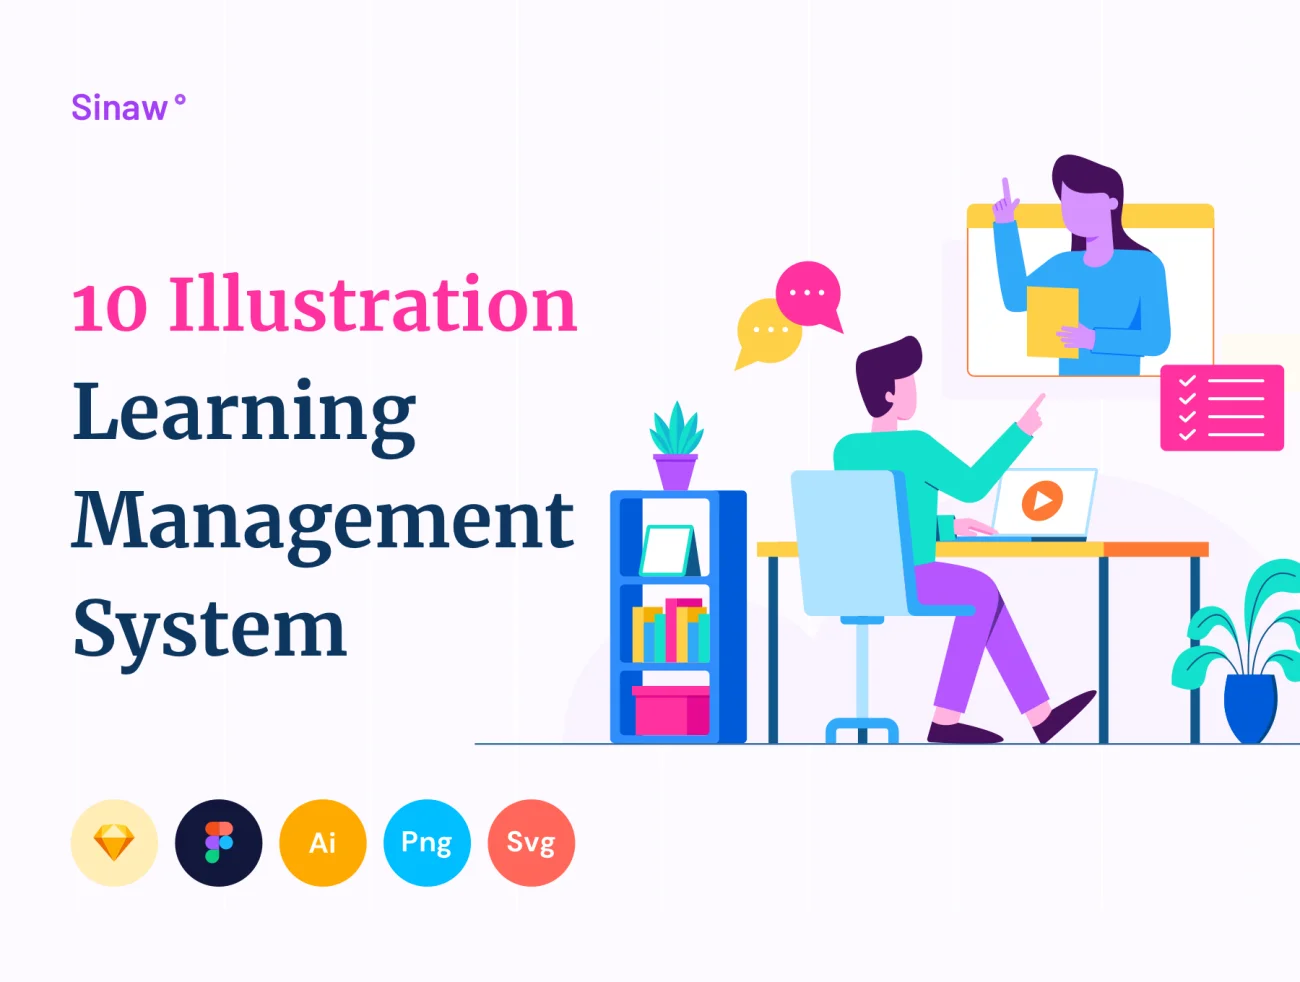 Sinaw Learning Management System Illustration Pack 学习管理系统教学平台矢量插图包插图1